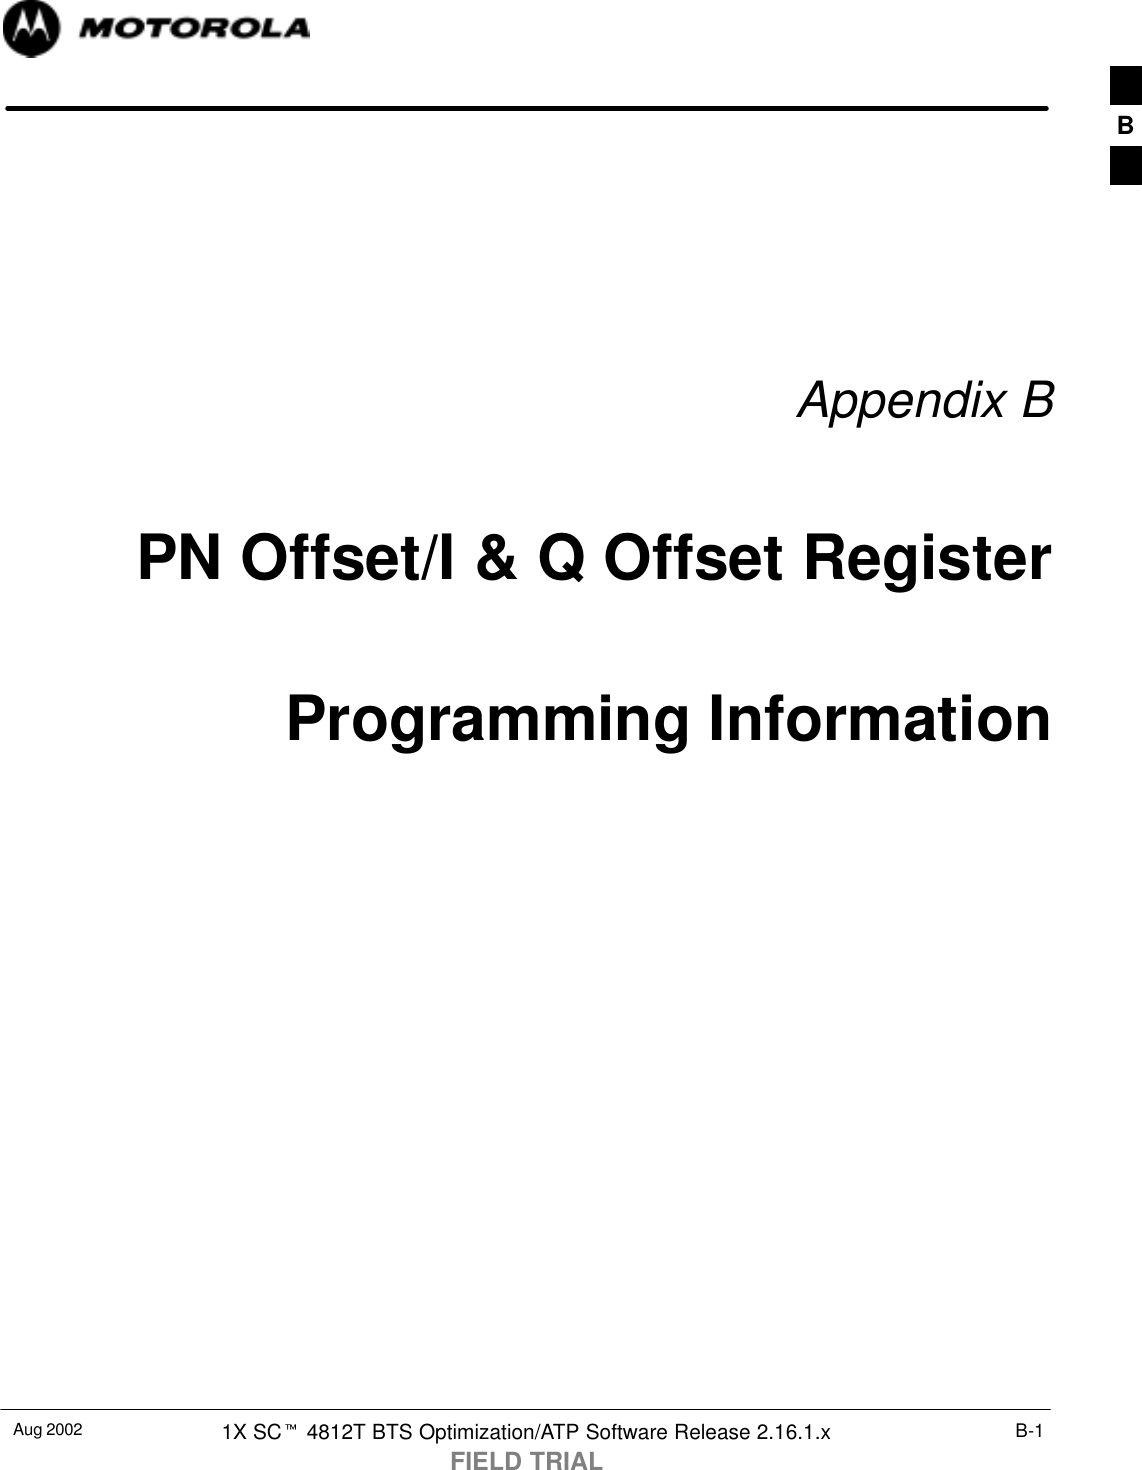 Aug 2002 1X SCt 4812T BTS Optimization/ATP Software Release 2.16.1.xFIELD TRIALB-1Appendix BPN Offset/I &amp; Q Offset RegisterProgramming InformationB